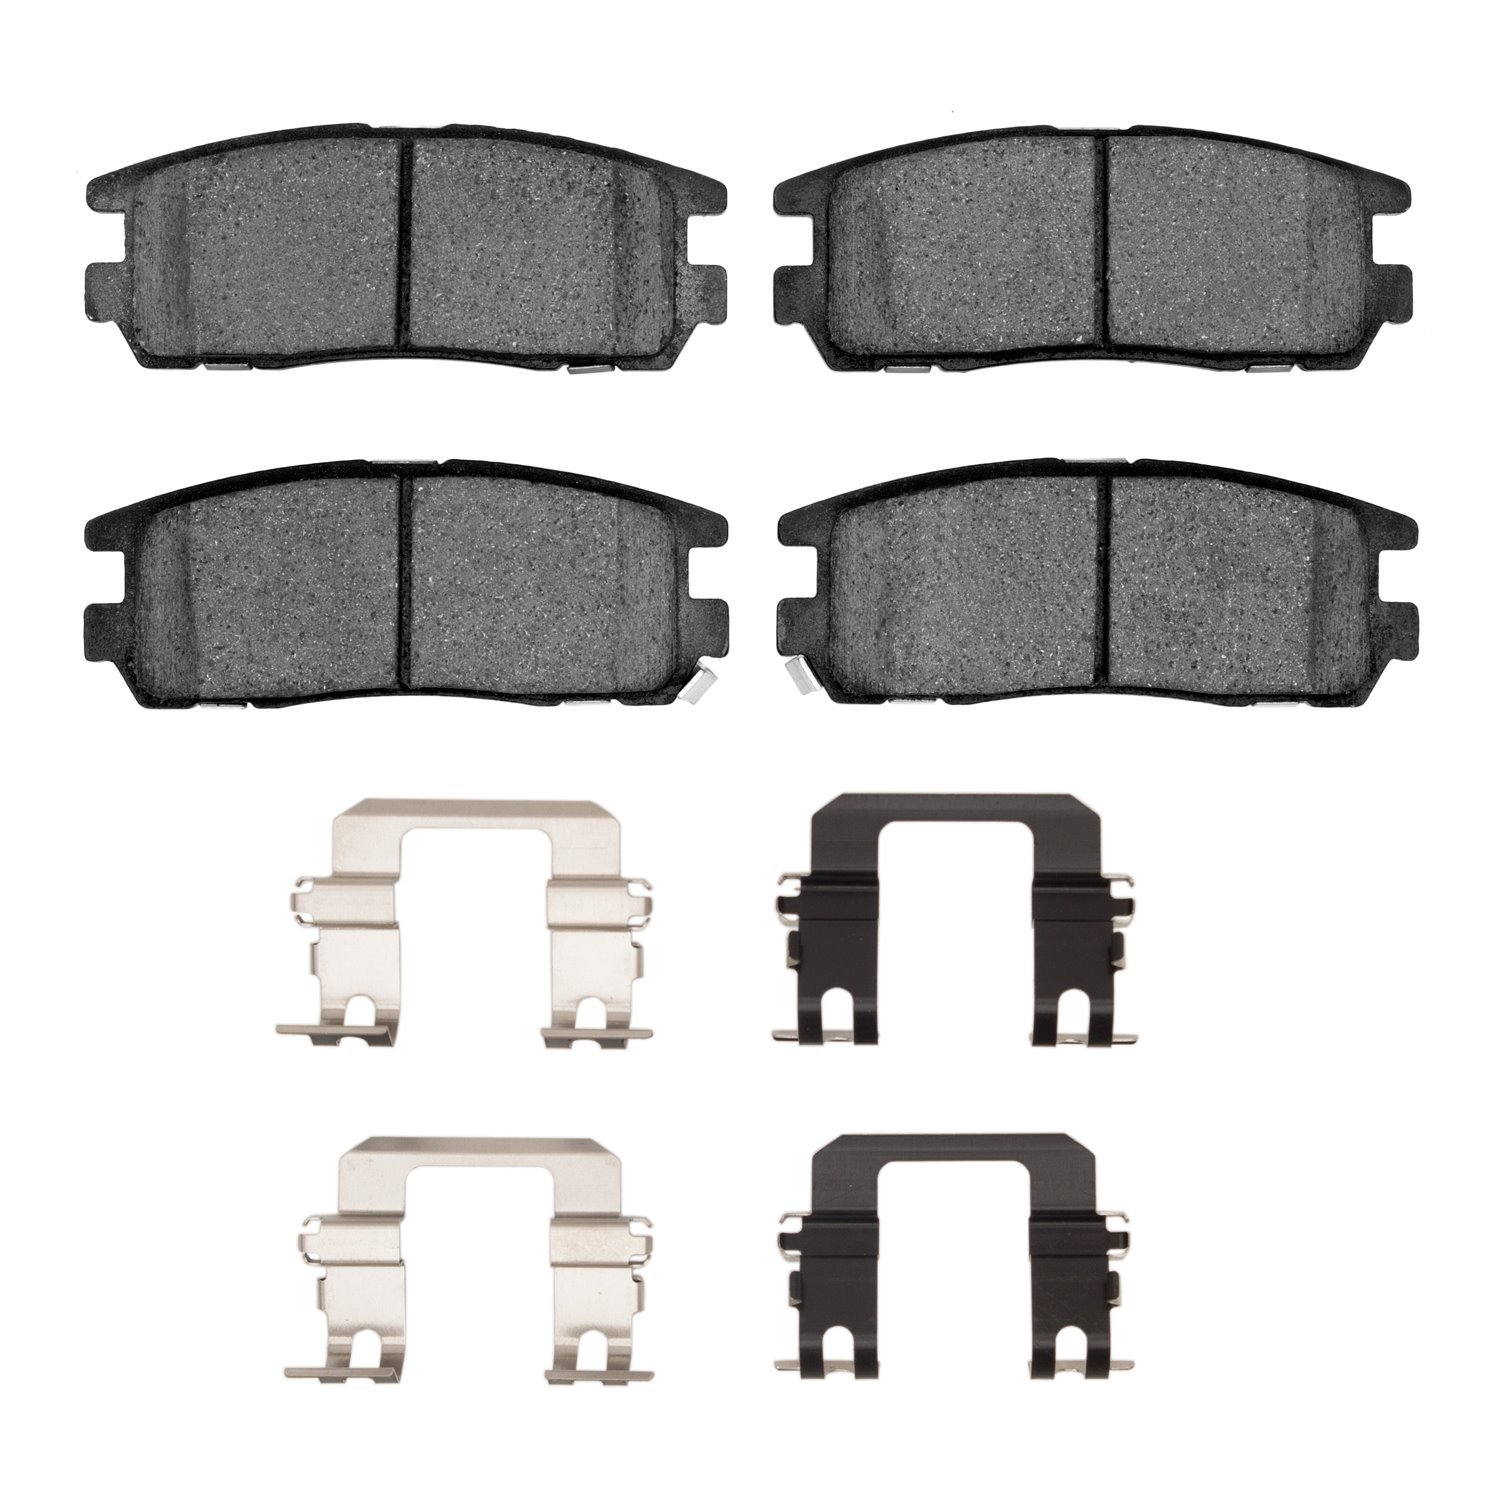 Semi-Metallic Brake Pads & Hardware Kit, 1992-2004 Fits Multiple Makes/Models, Position: Rear